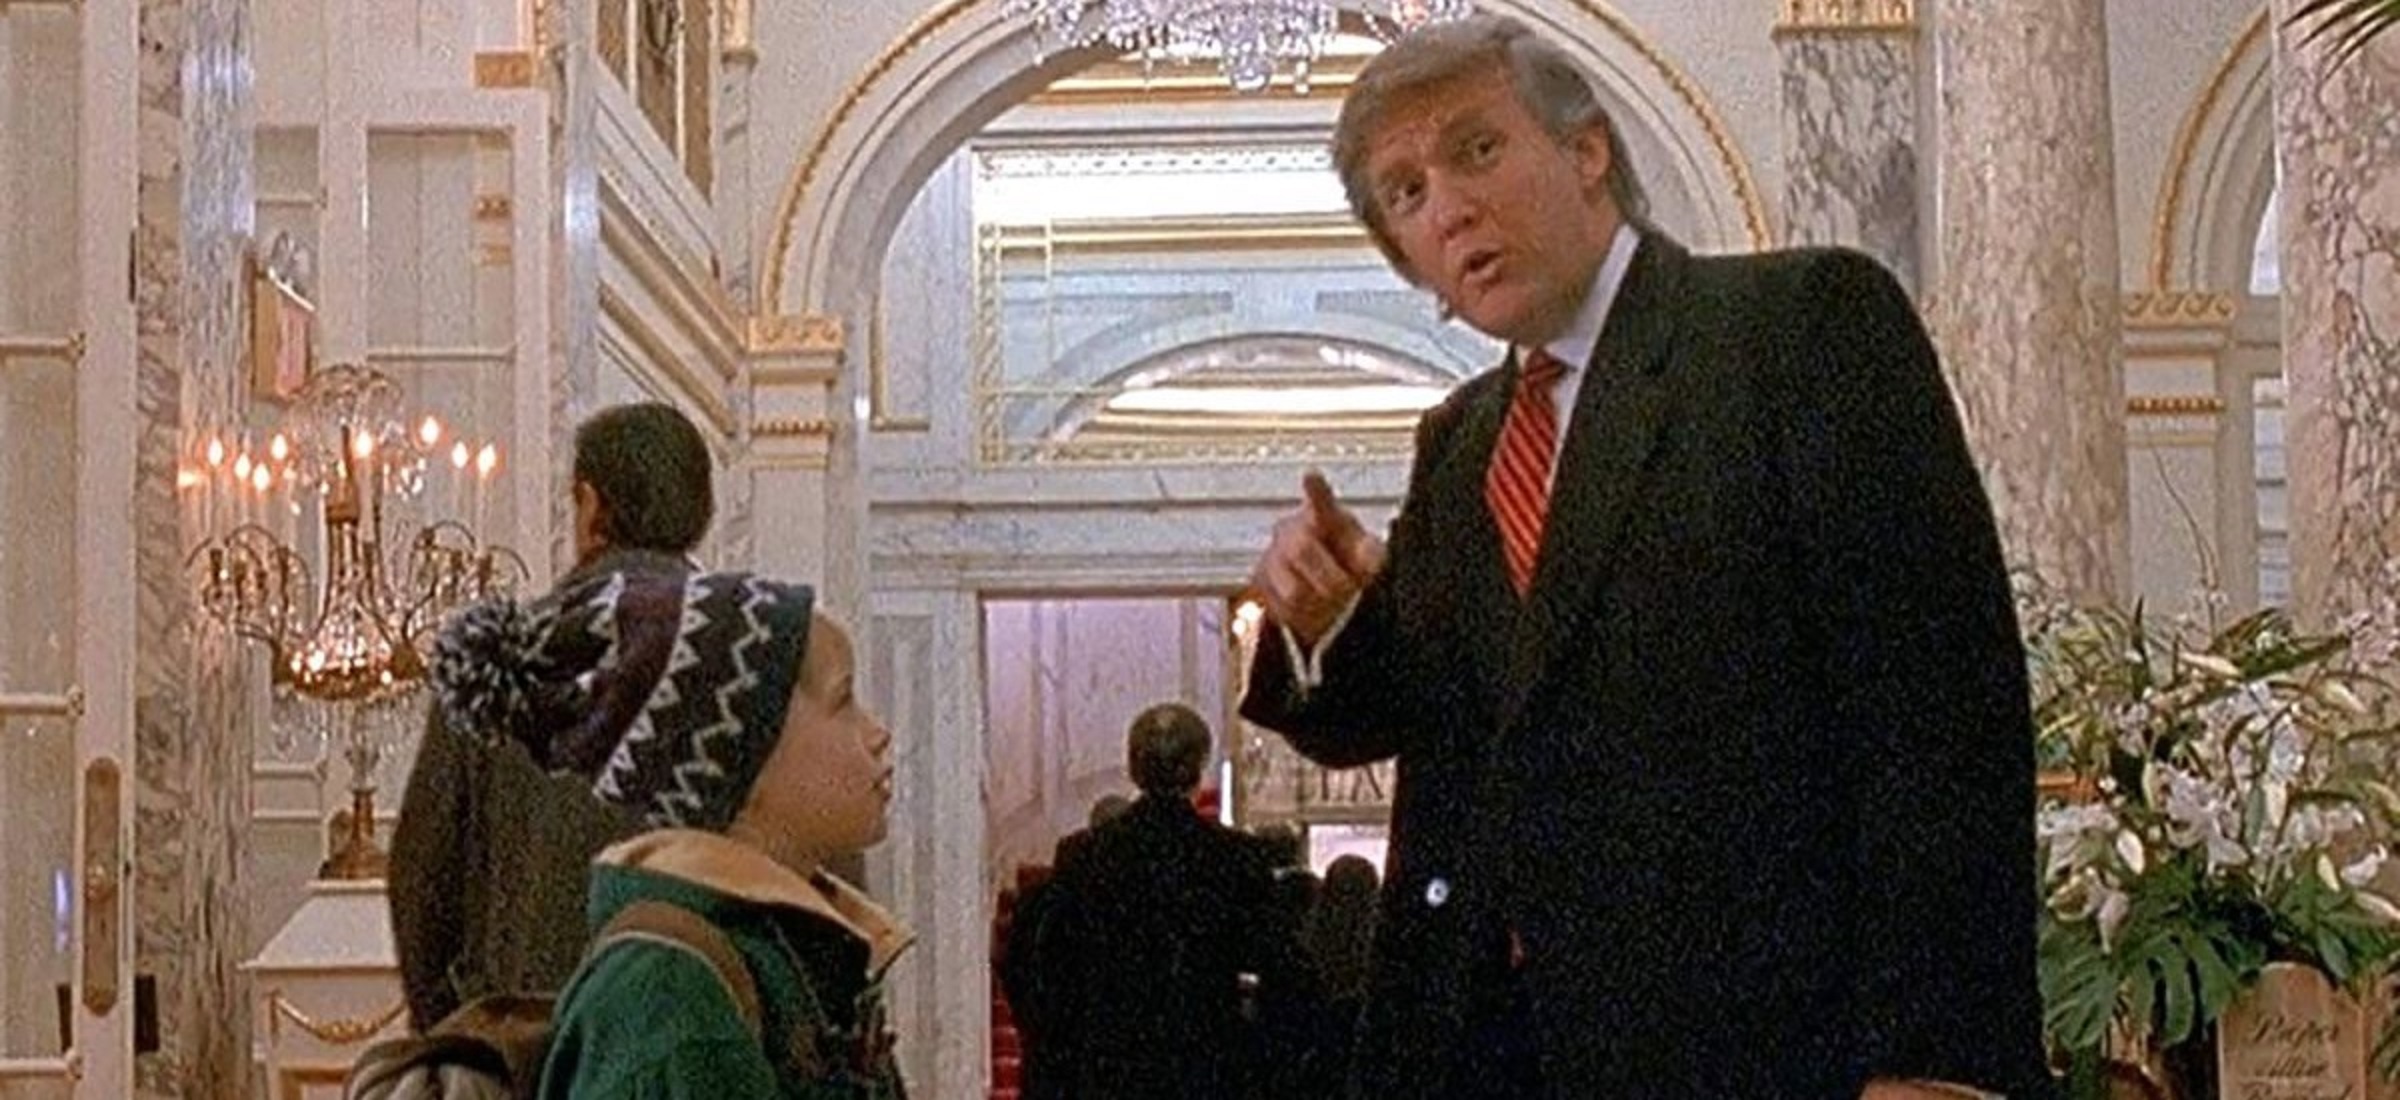 Kevin Sam W Nowym Jorku Trump Donald Trump usunięty z filmu Kevin sam w Nowym Jorku? Fani apelują